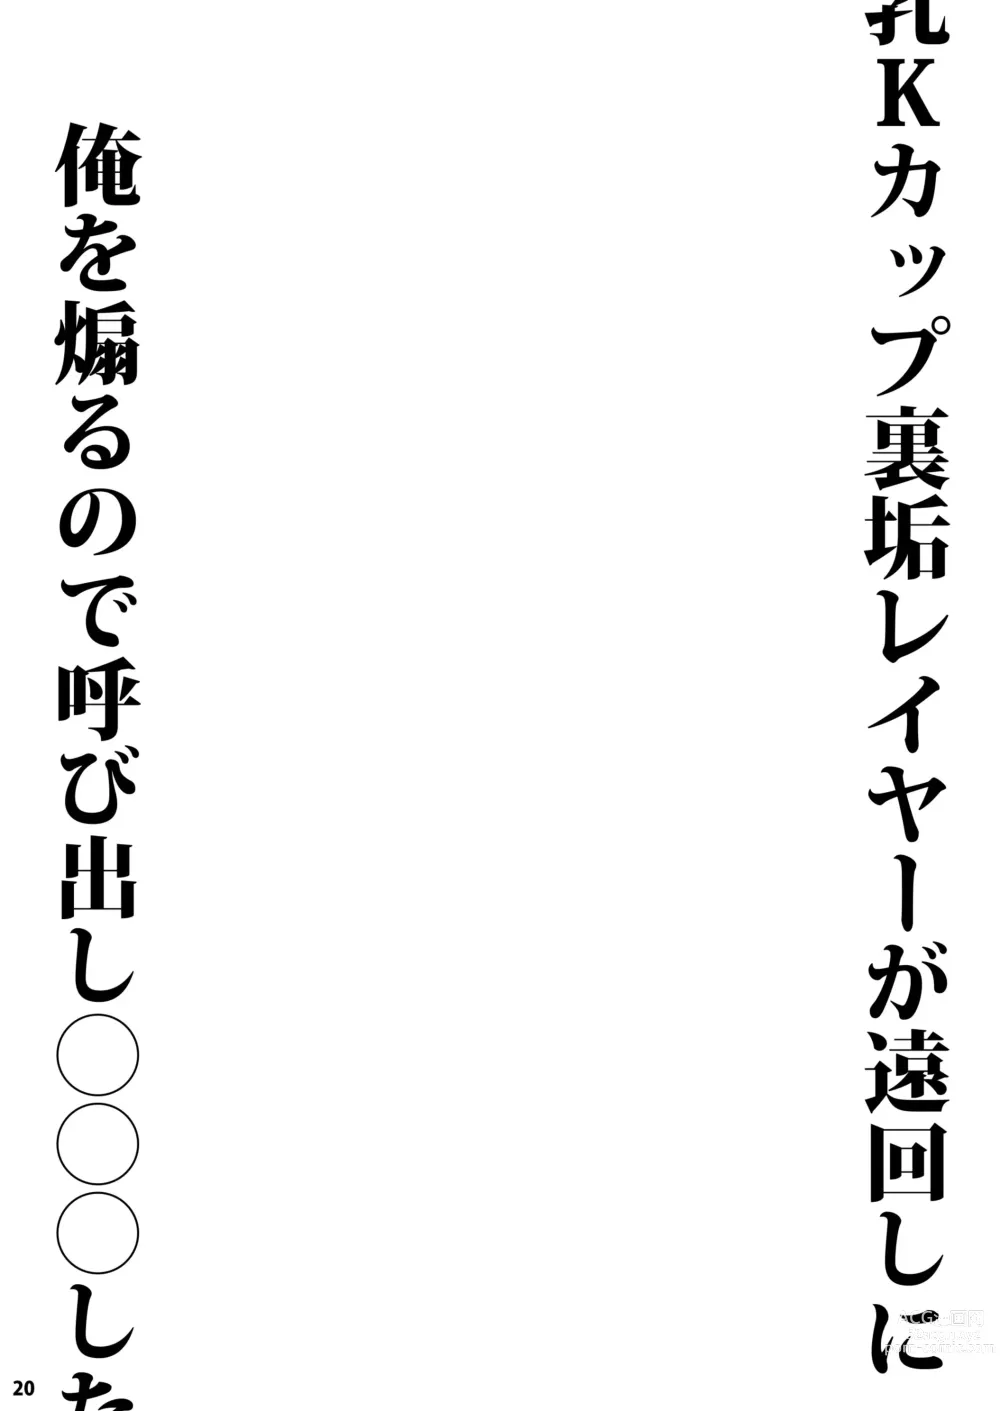 Page 20 of doujinshi 关于K杯长乳COSER不断的绕圈子用小号诱惑我所以我就把她叫出来狠狠地XXX了的事情